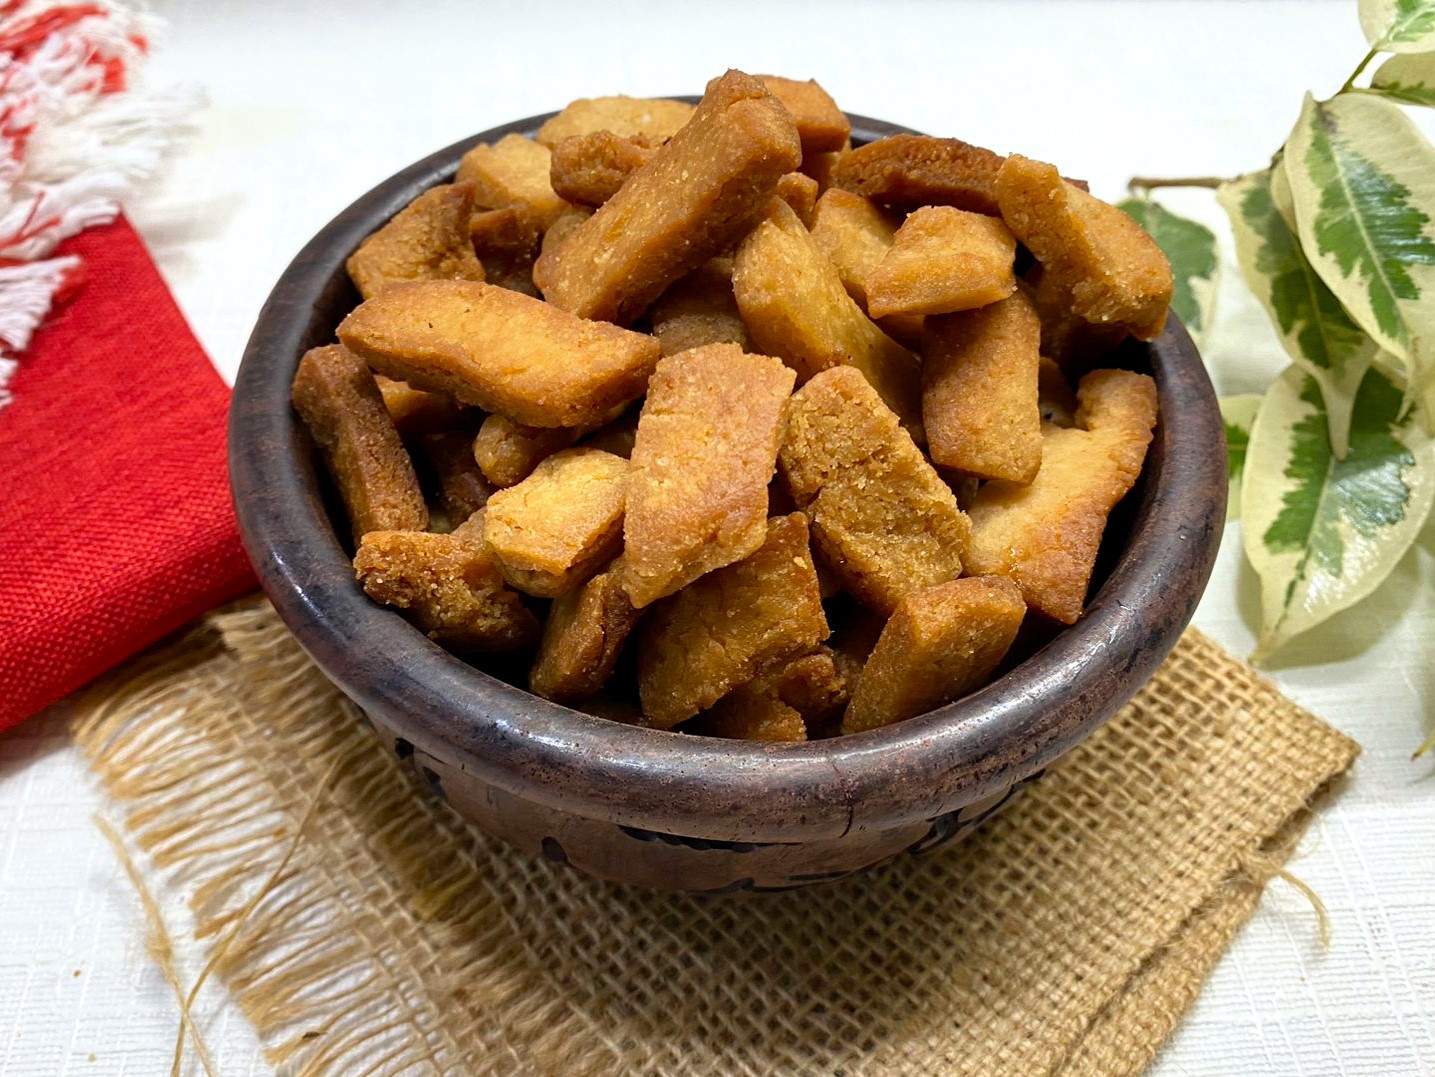 Shankarpali Recipe